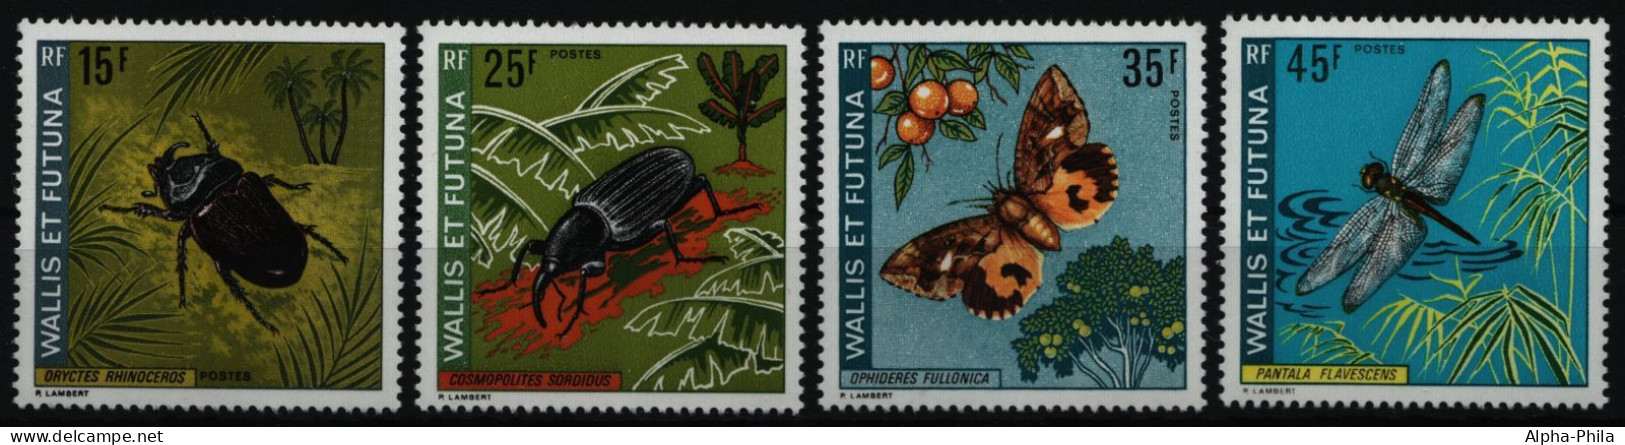 Wallis & Futuna 1974 - Mi-Nr. 254-257 ** - MNH - Insekten / Insects - Neufs